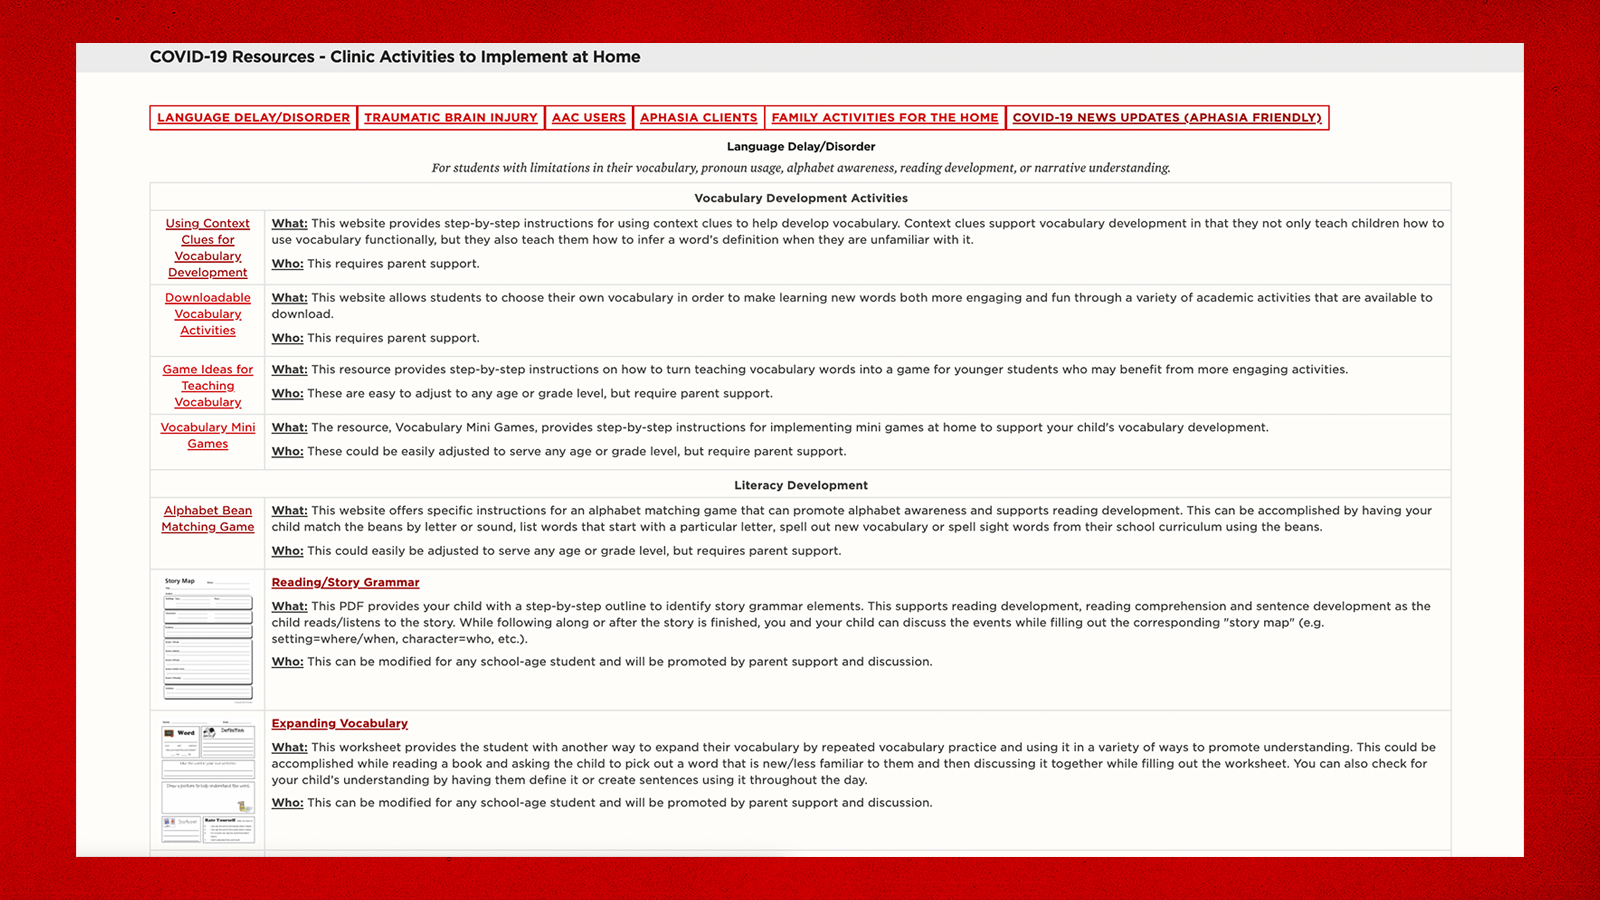 Screenshot of the COVID-19 Resource webpage